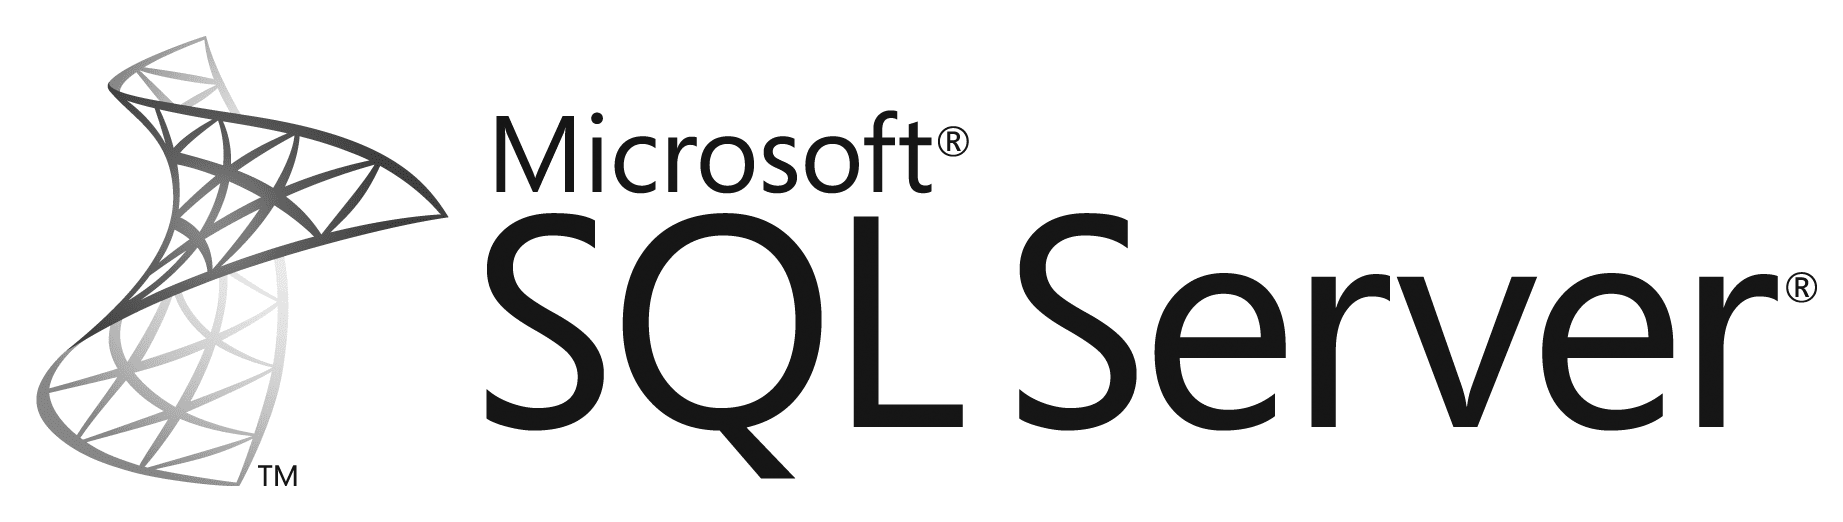 Microsoft SQL Server Training at ROGERSOFT